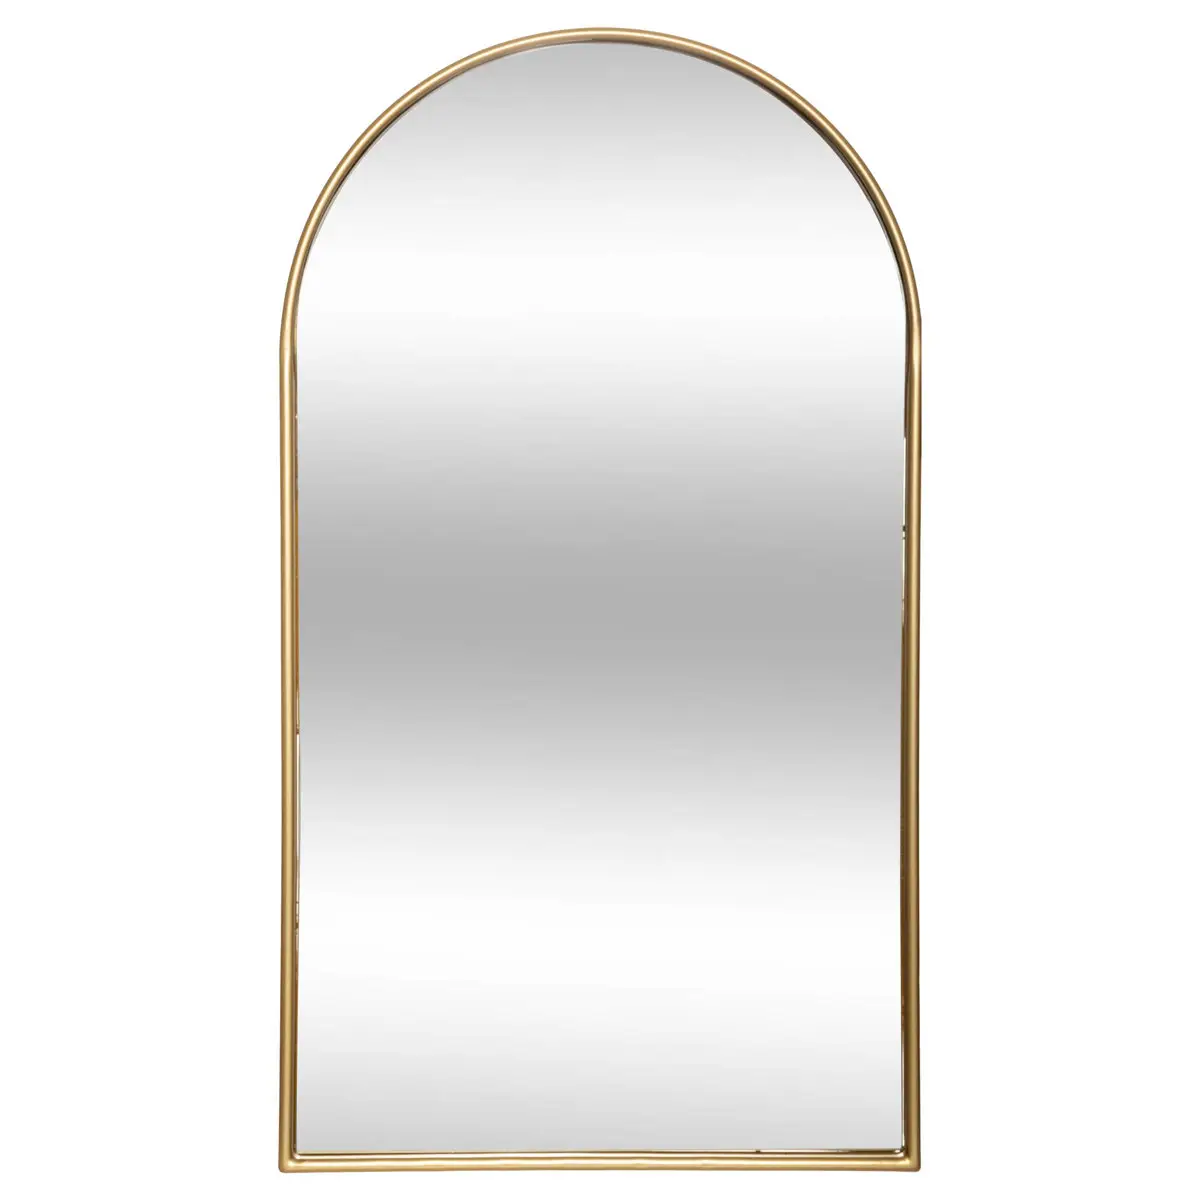 Wandspiegel JOYCE, gold Rahmen, 60x106cm